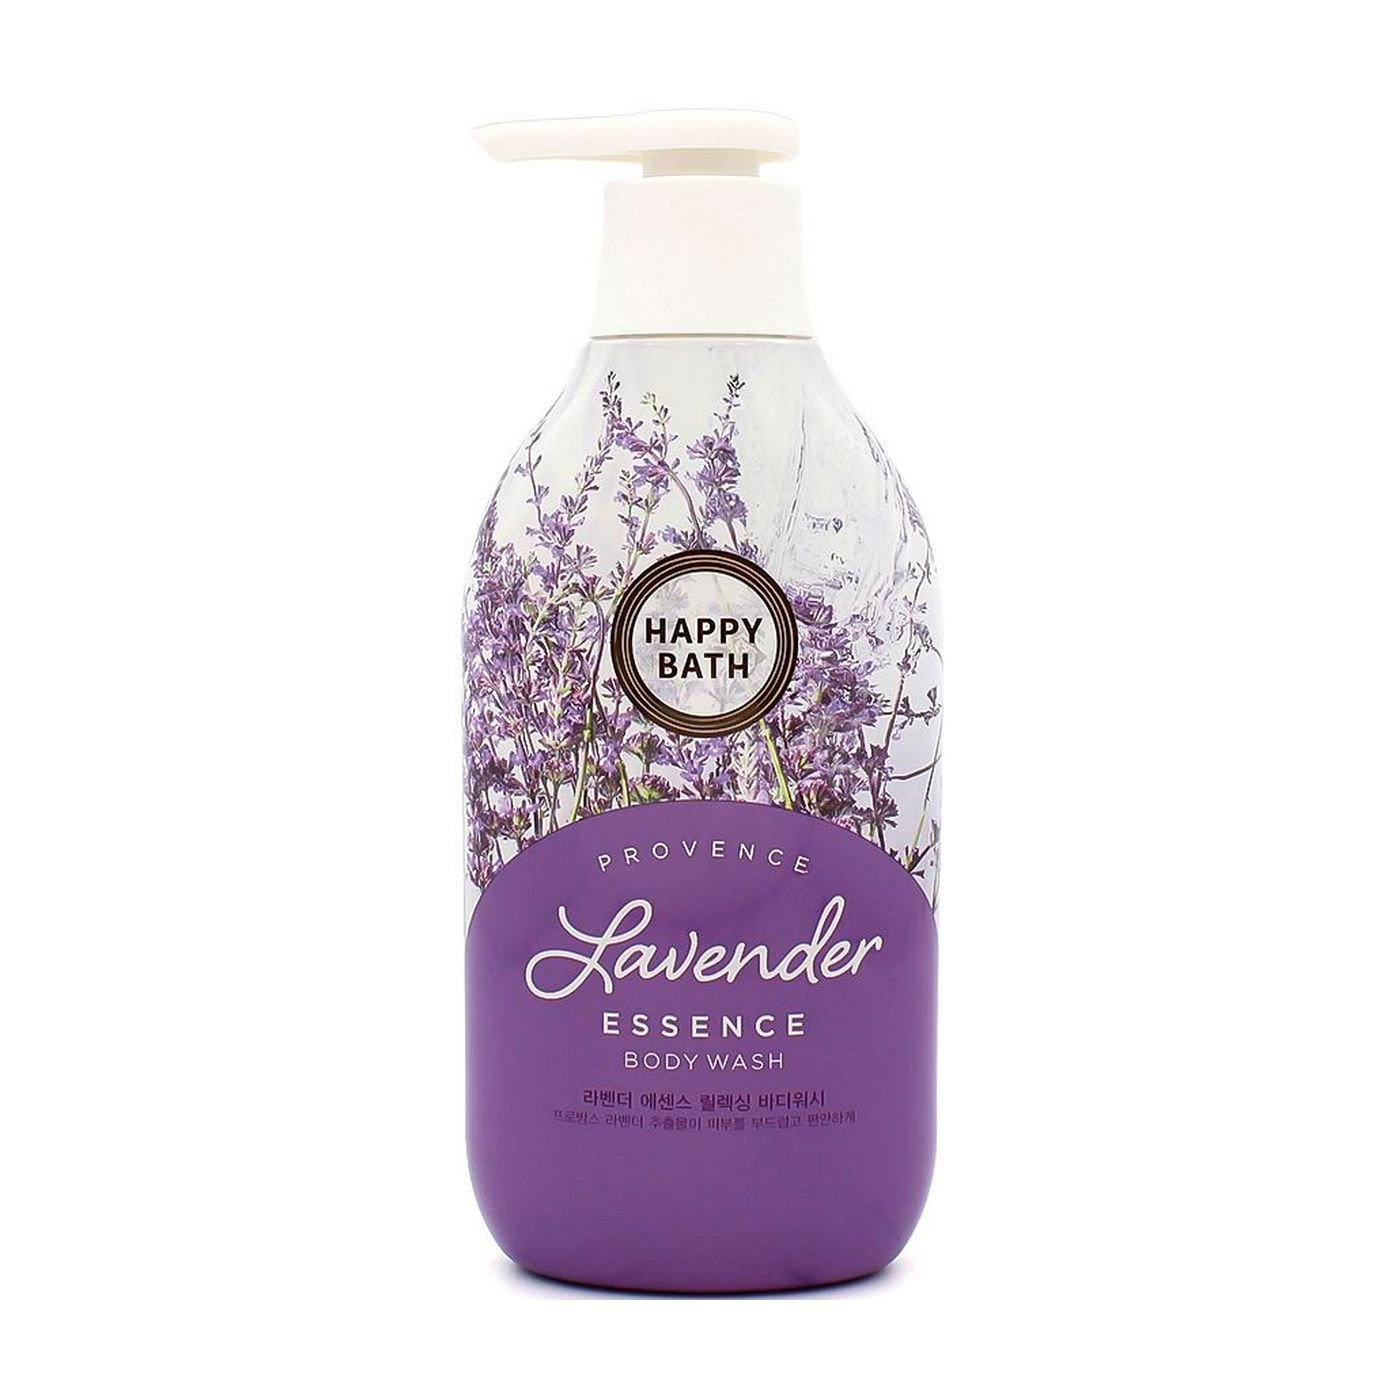 Гель для душа bath. HAPPYBATH Lavender Essence body Wash гель для душа Лаванда, 500мл. Happy Bath гель для душа Лаванда. Гель эссенция Happy Bath.